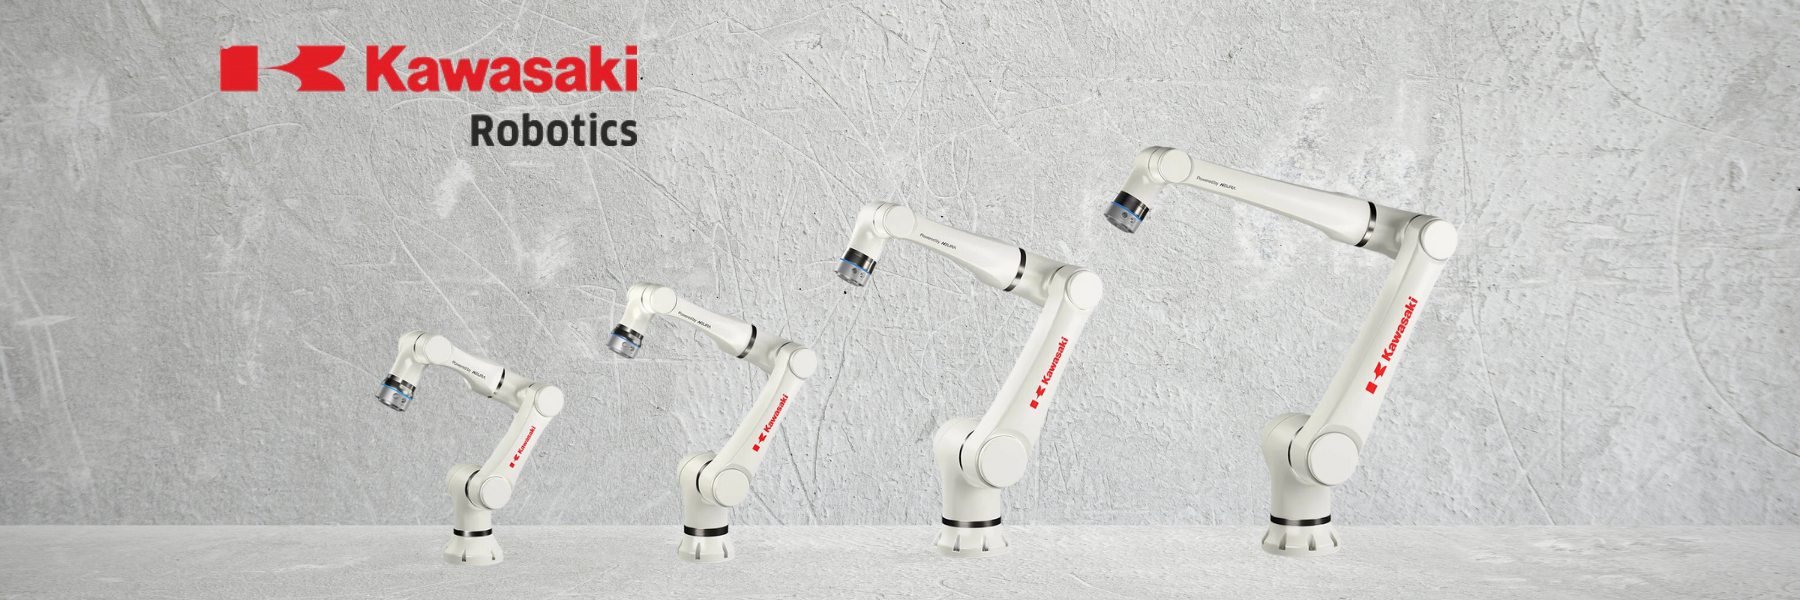 Servi-tech industrial robotics - industrial cobots kawasaki